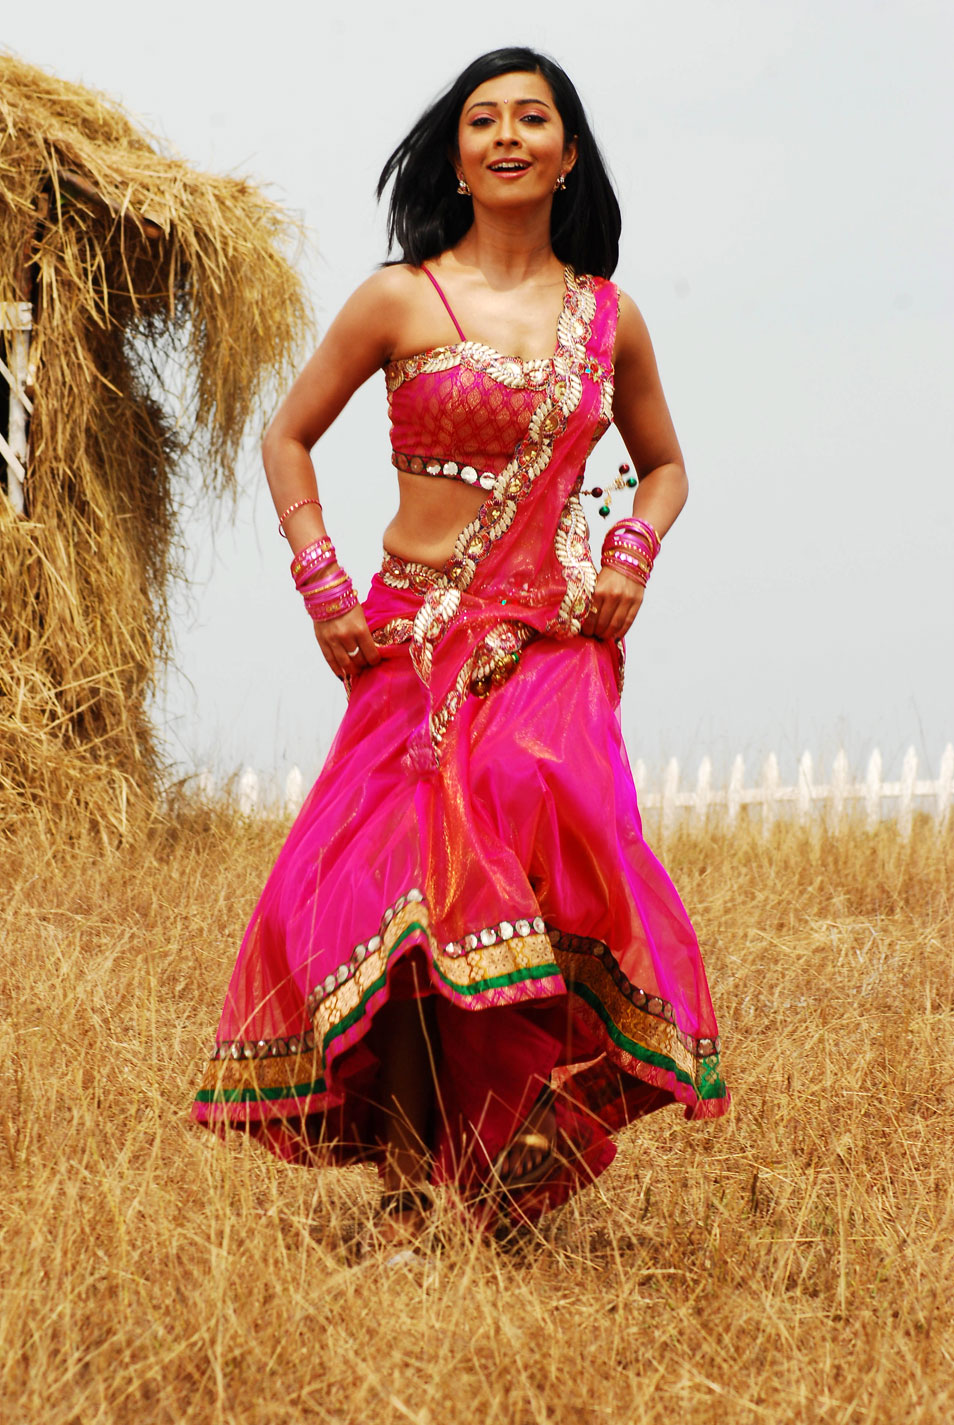 Radhika Pandit s POSES Stunning and Beautiful, Have a Glance